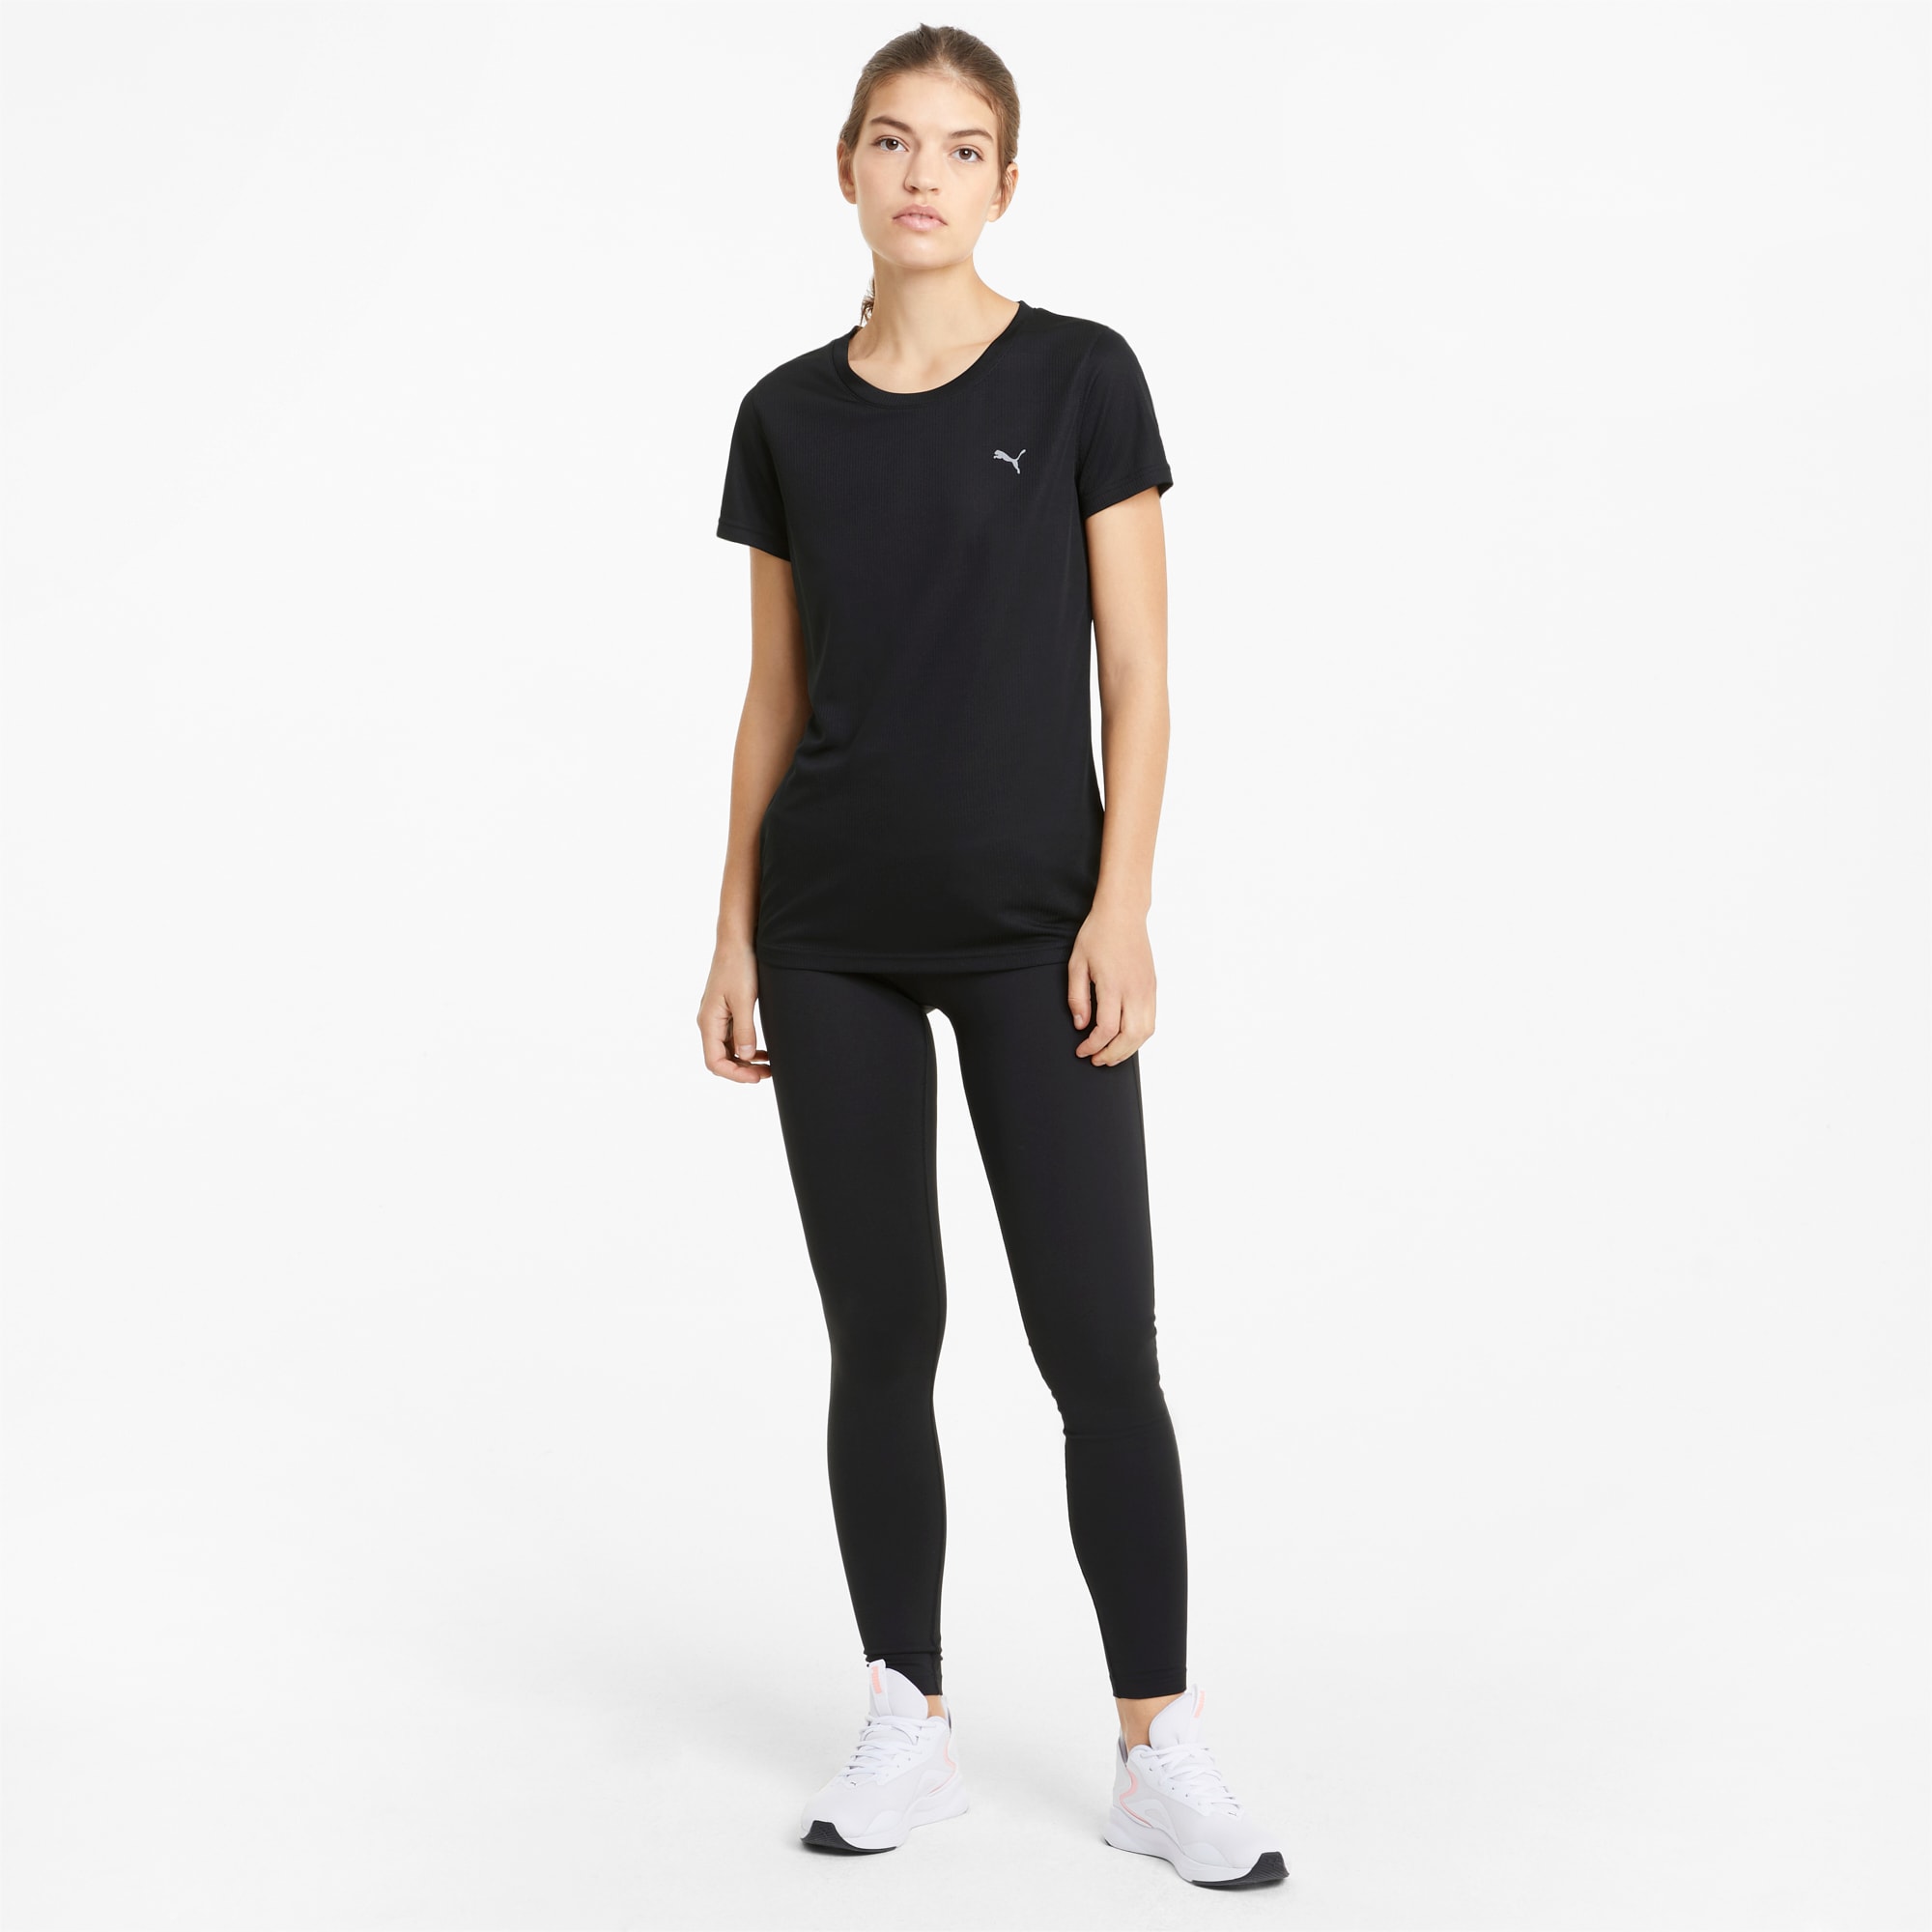 PUMA Performance Women's Training T-Shirt, Black, Size 3XL, Clothing